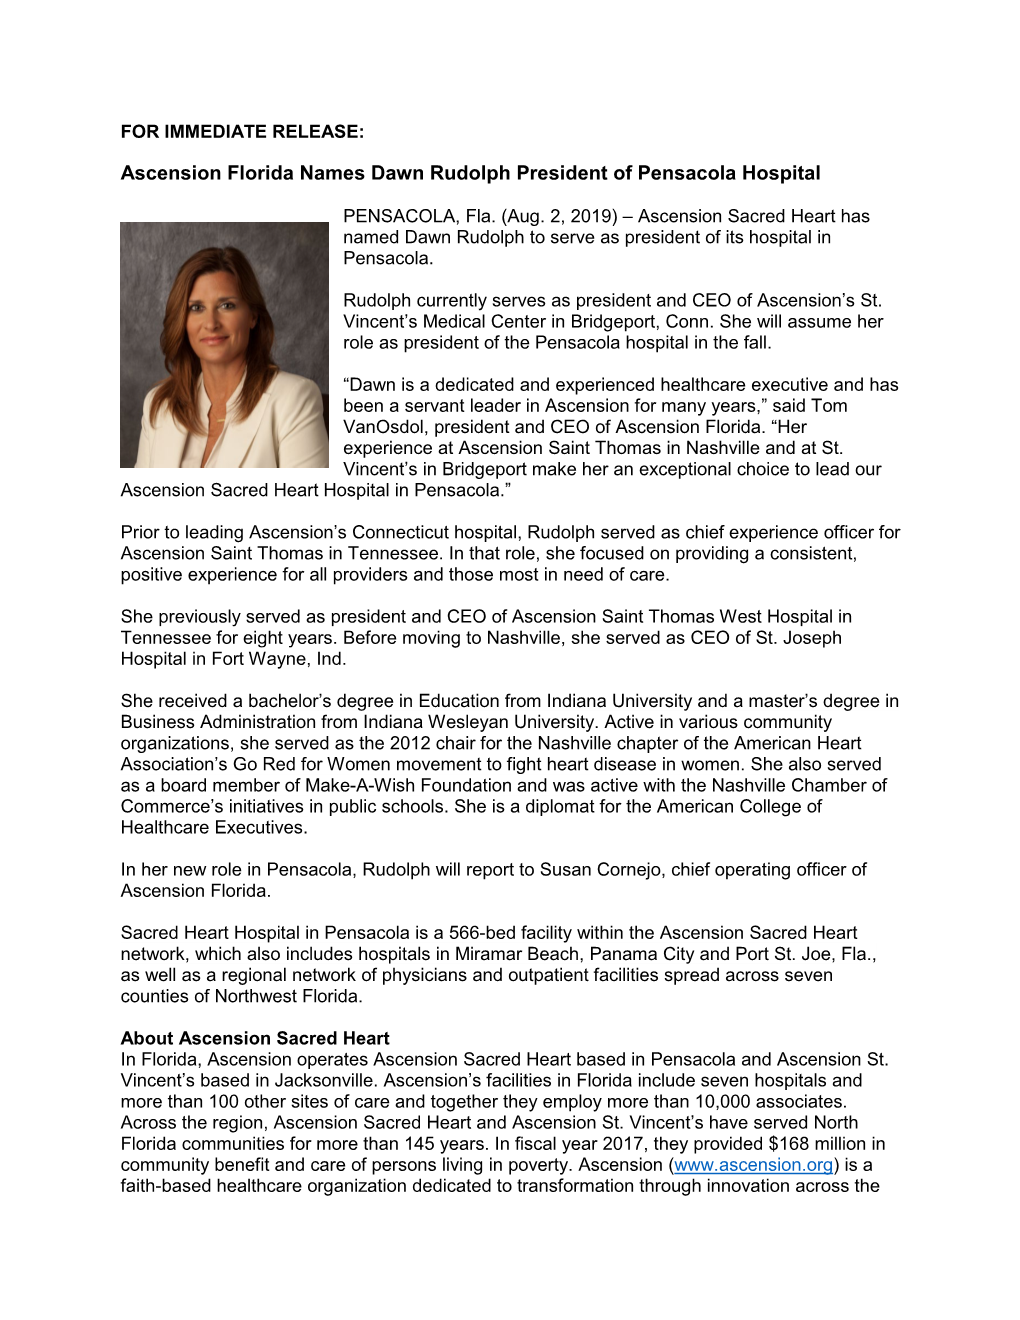 Ascension Florida Names Dawn Rudolph President of Pensacola Hospital